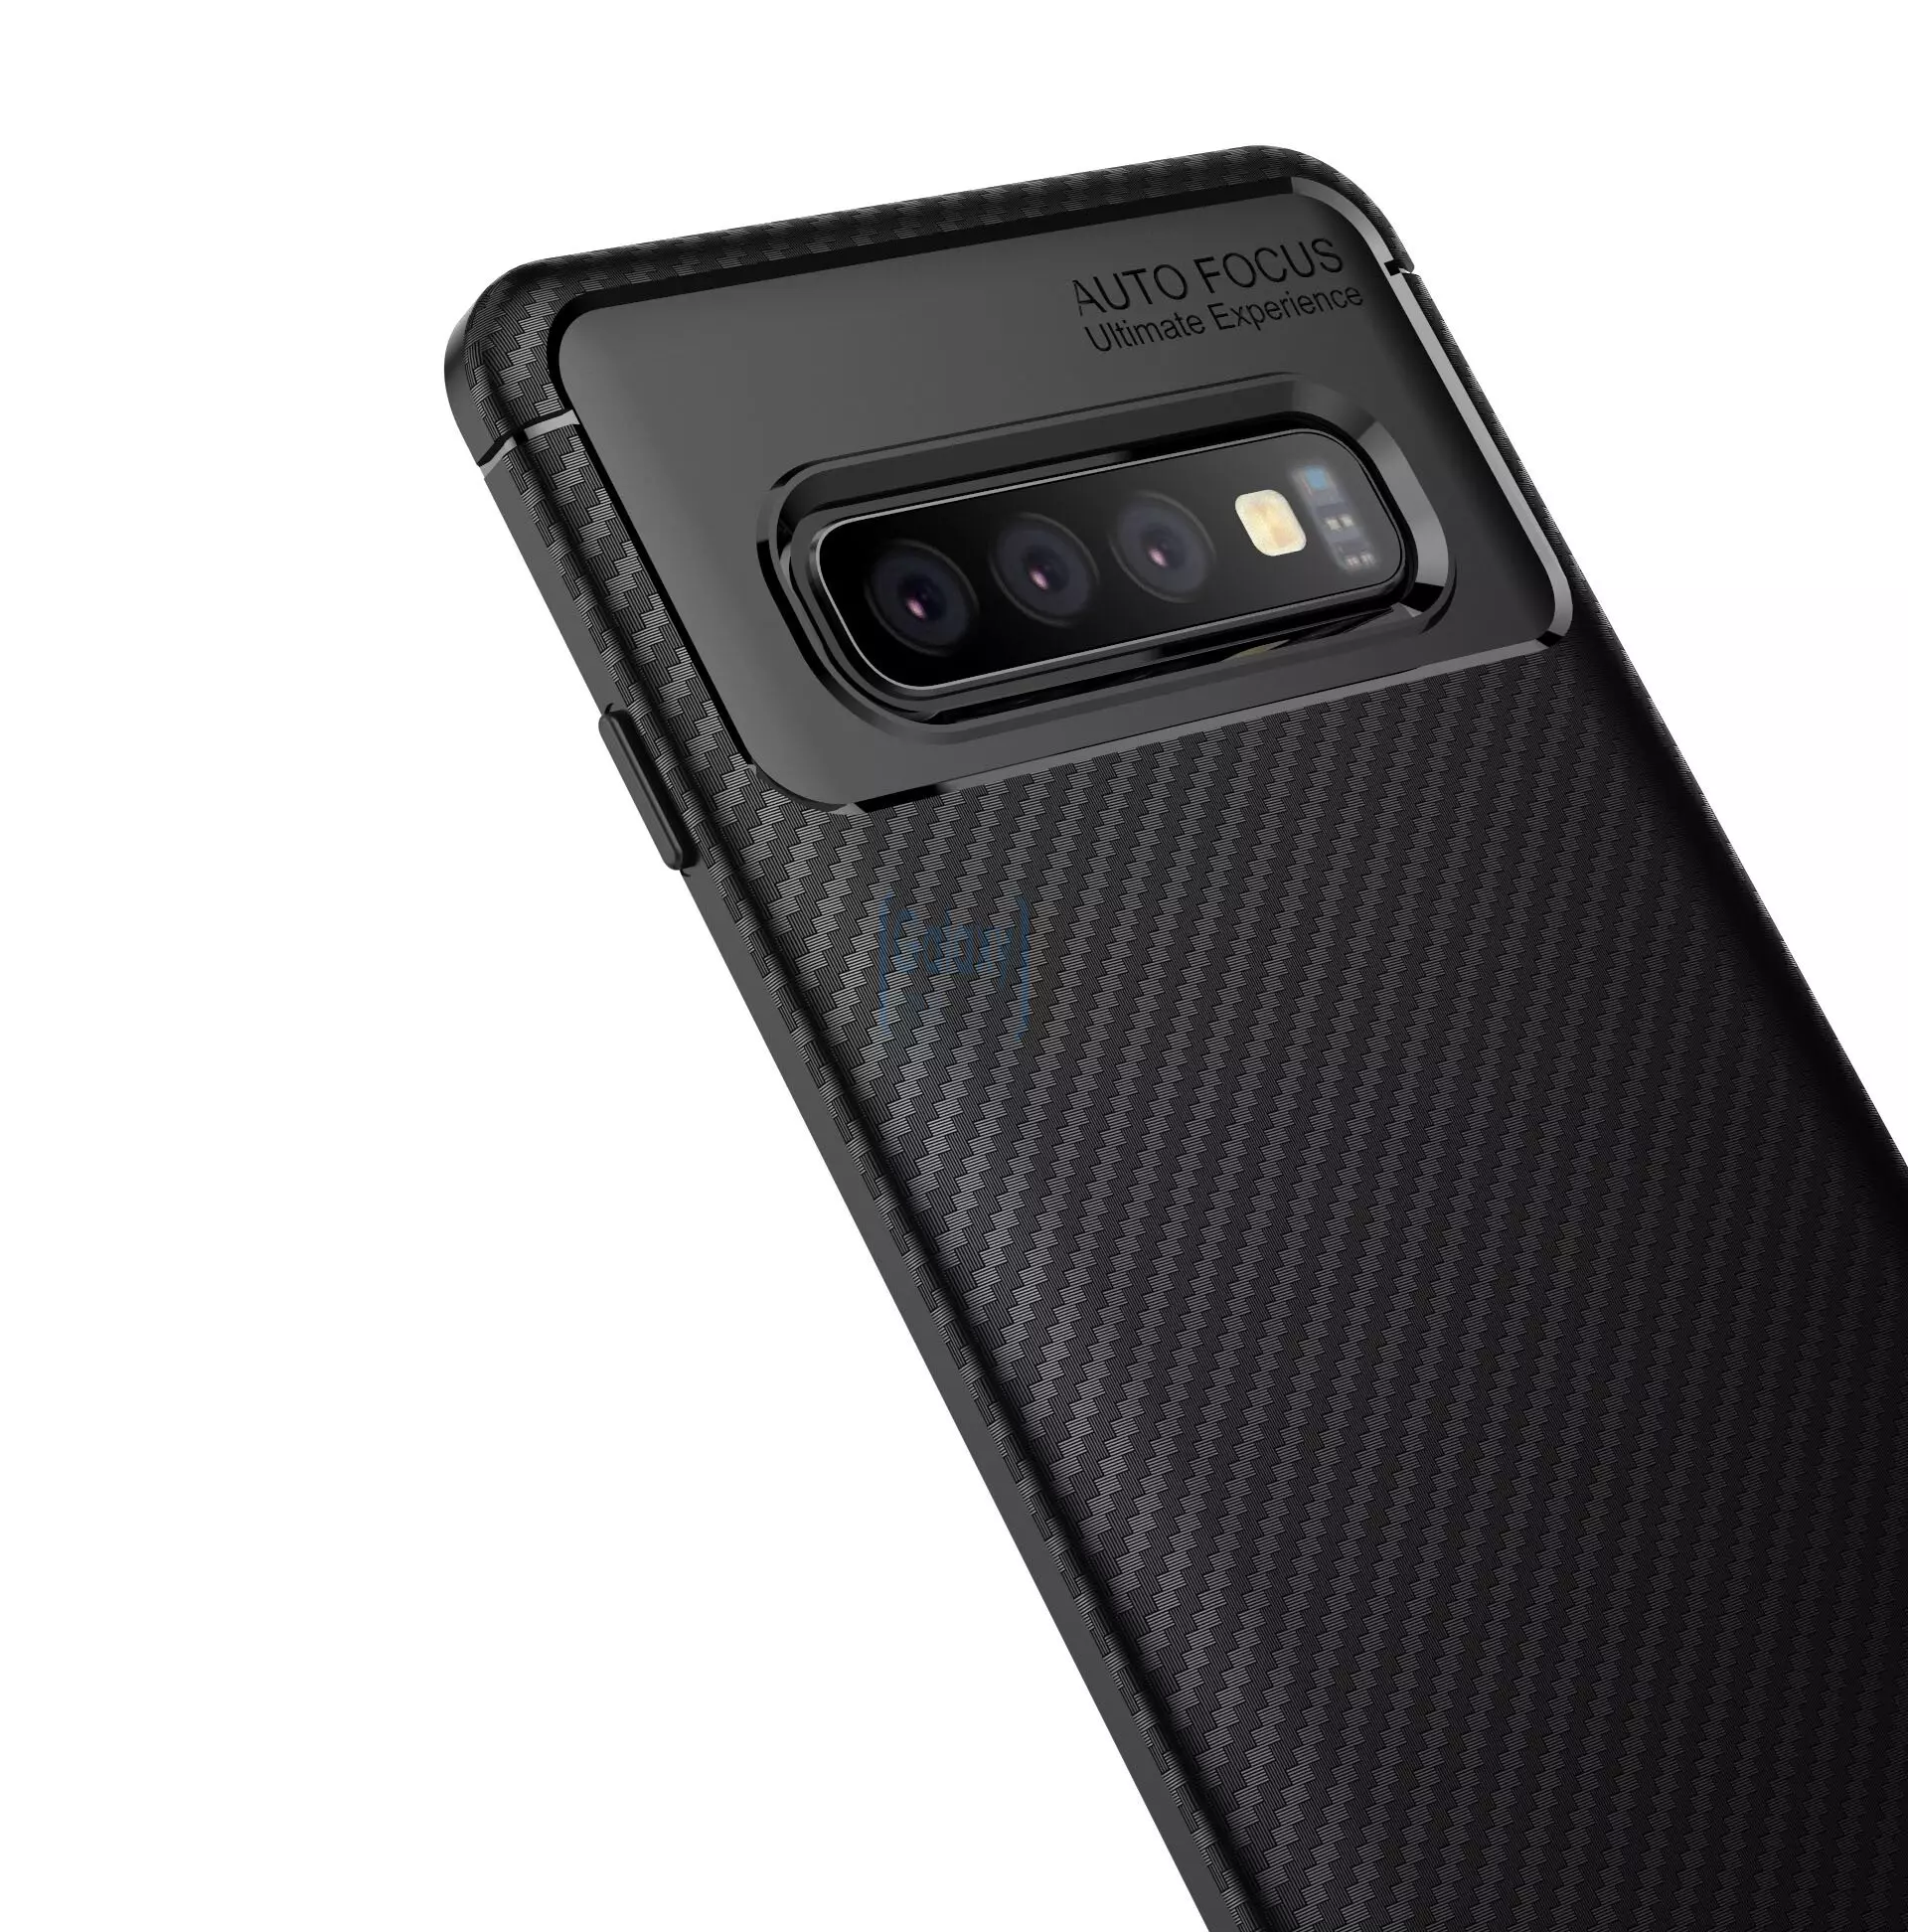 Чехол бампер Ipaky Lasy Case для Samsung Galaxy S10 Plus Brown (Коричневый)